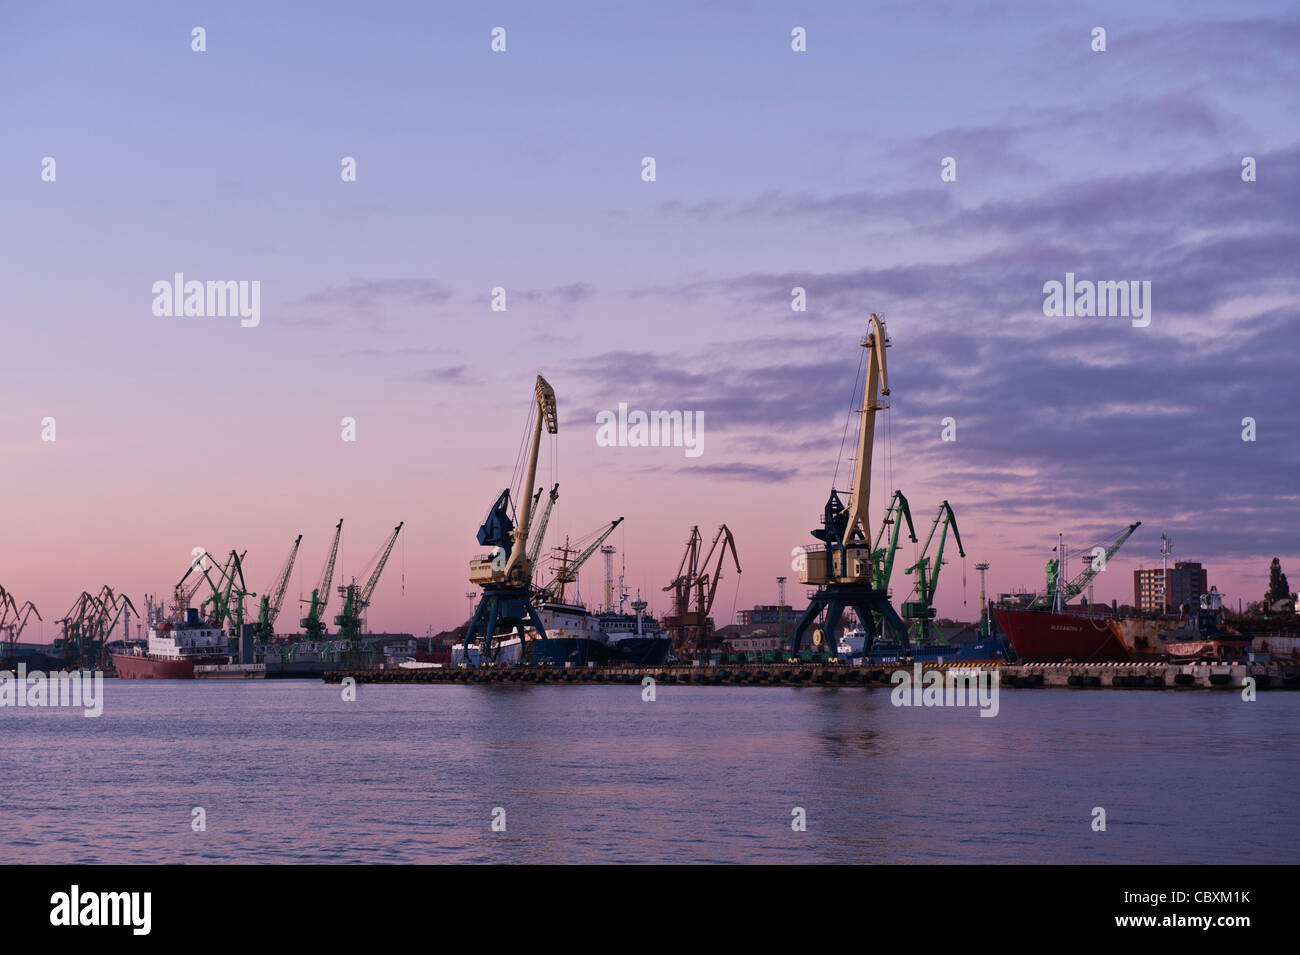 Shipping port at Klaipeda, Lithuania Stock Photo